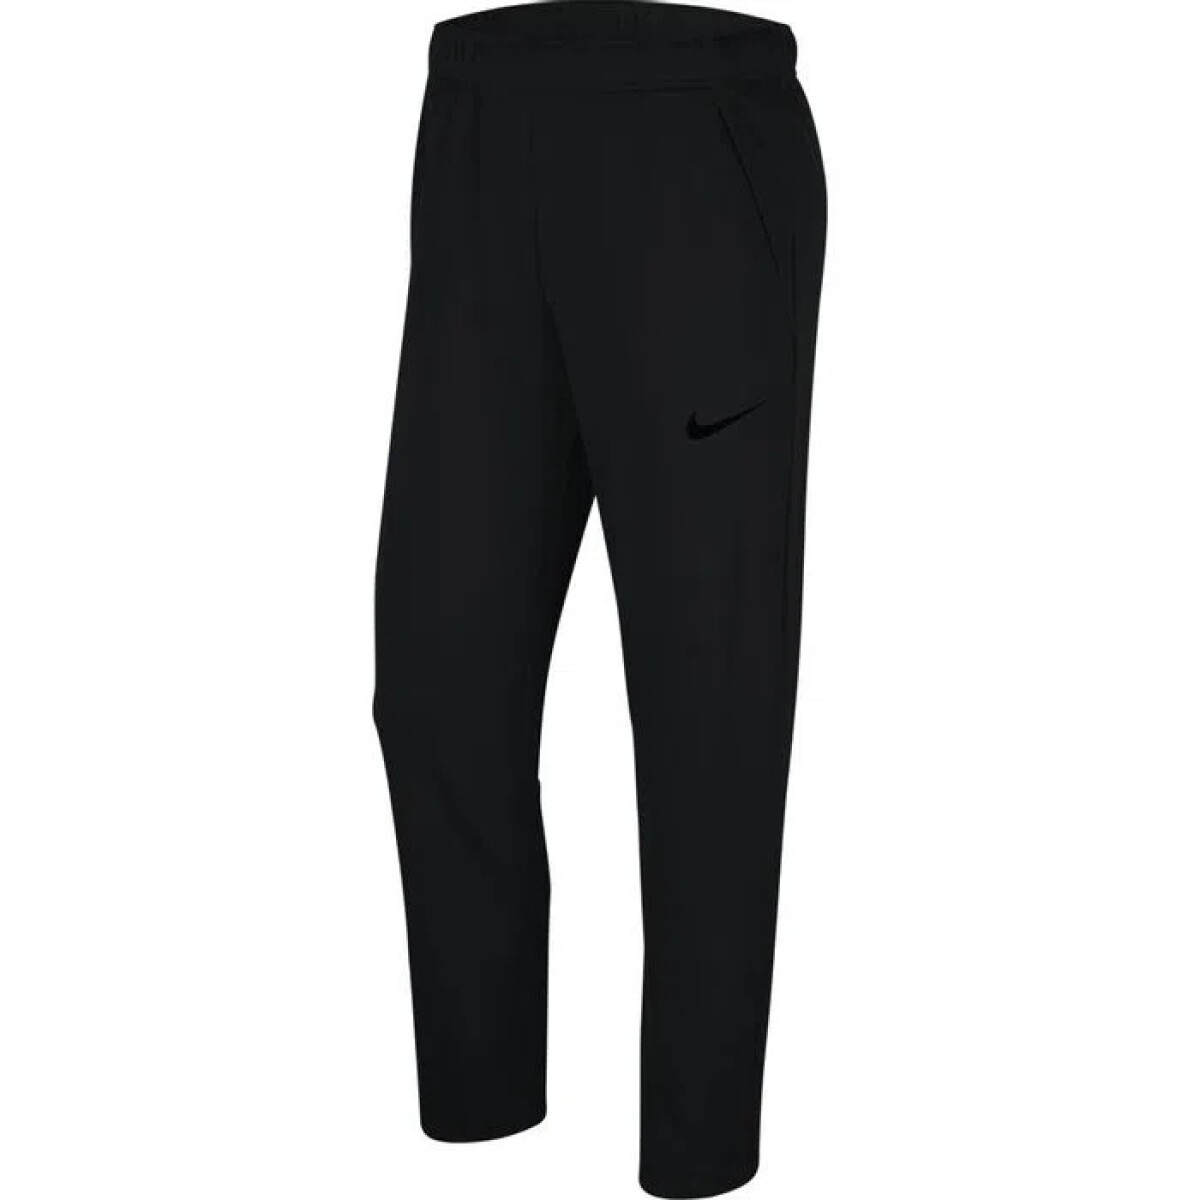 Pantalon Nike Training Hombre Epic - Color Único 